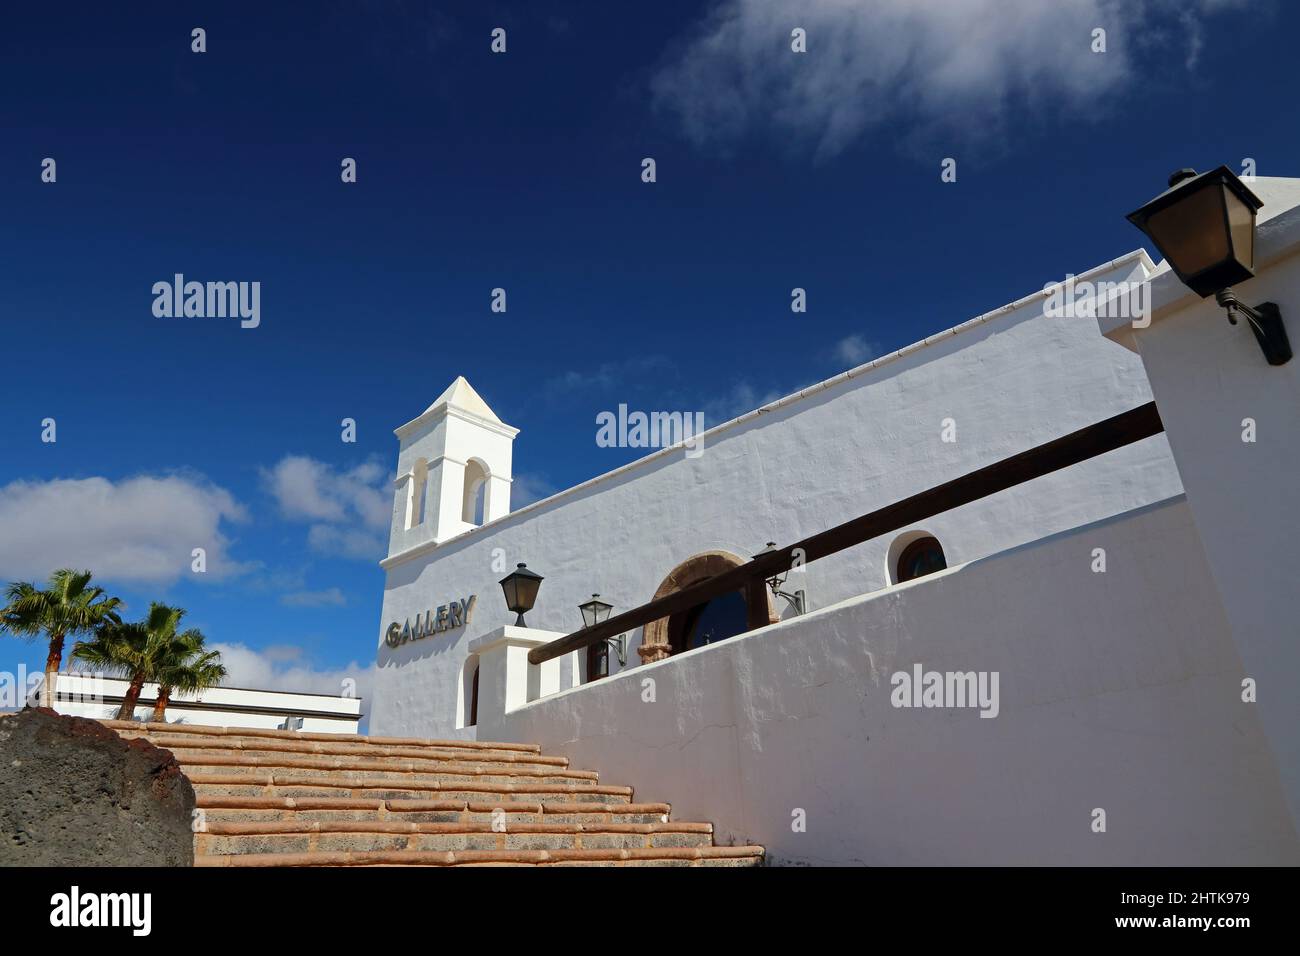 White Gallery building, Rubicon Marina, Playa Blanca, Lanzarote Stock Photo